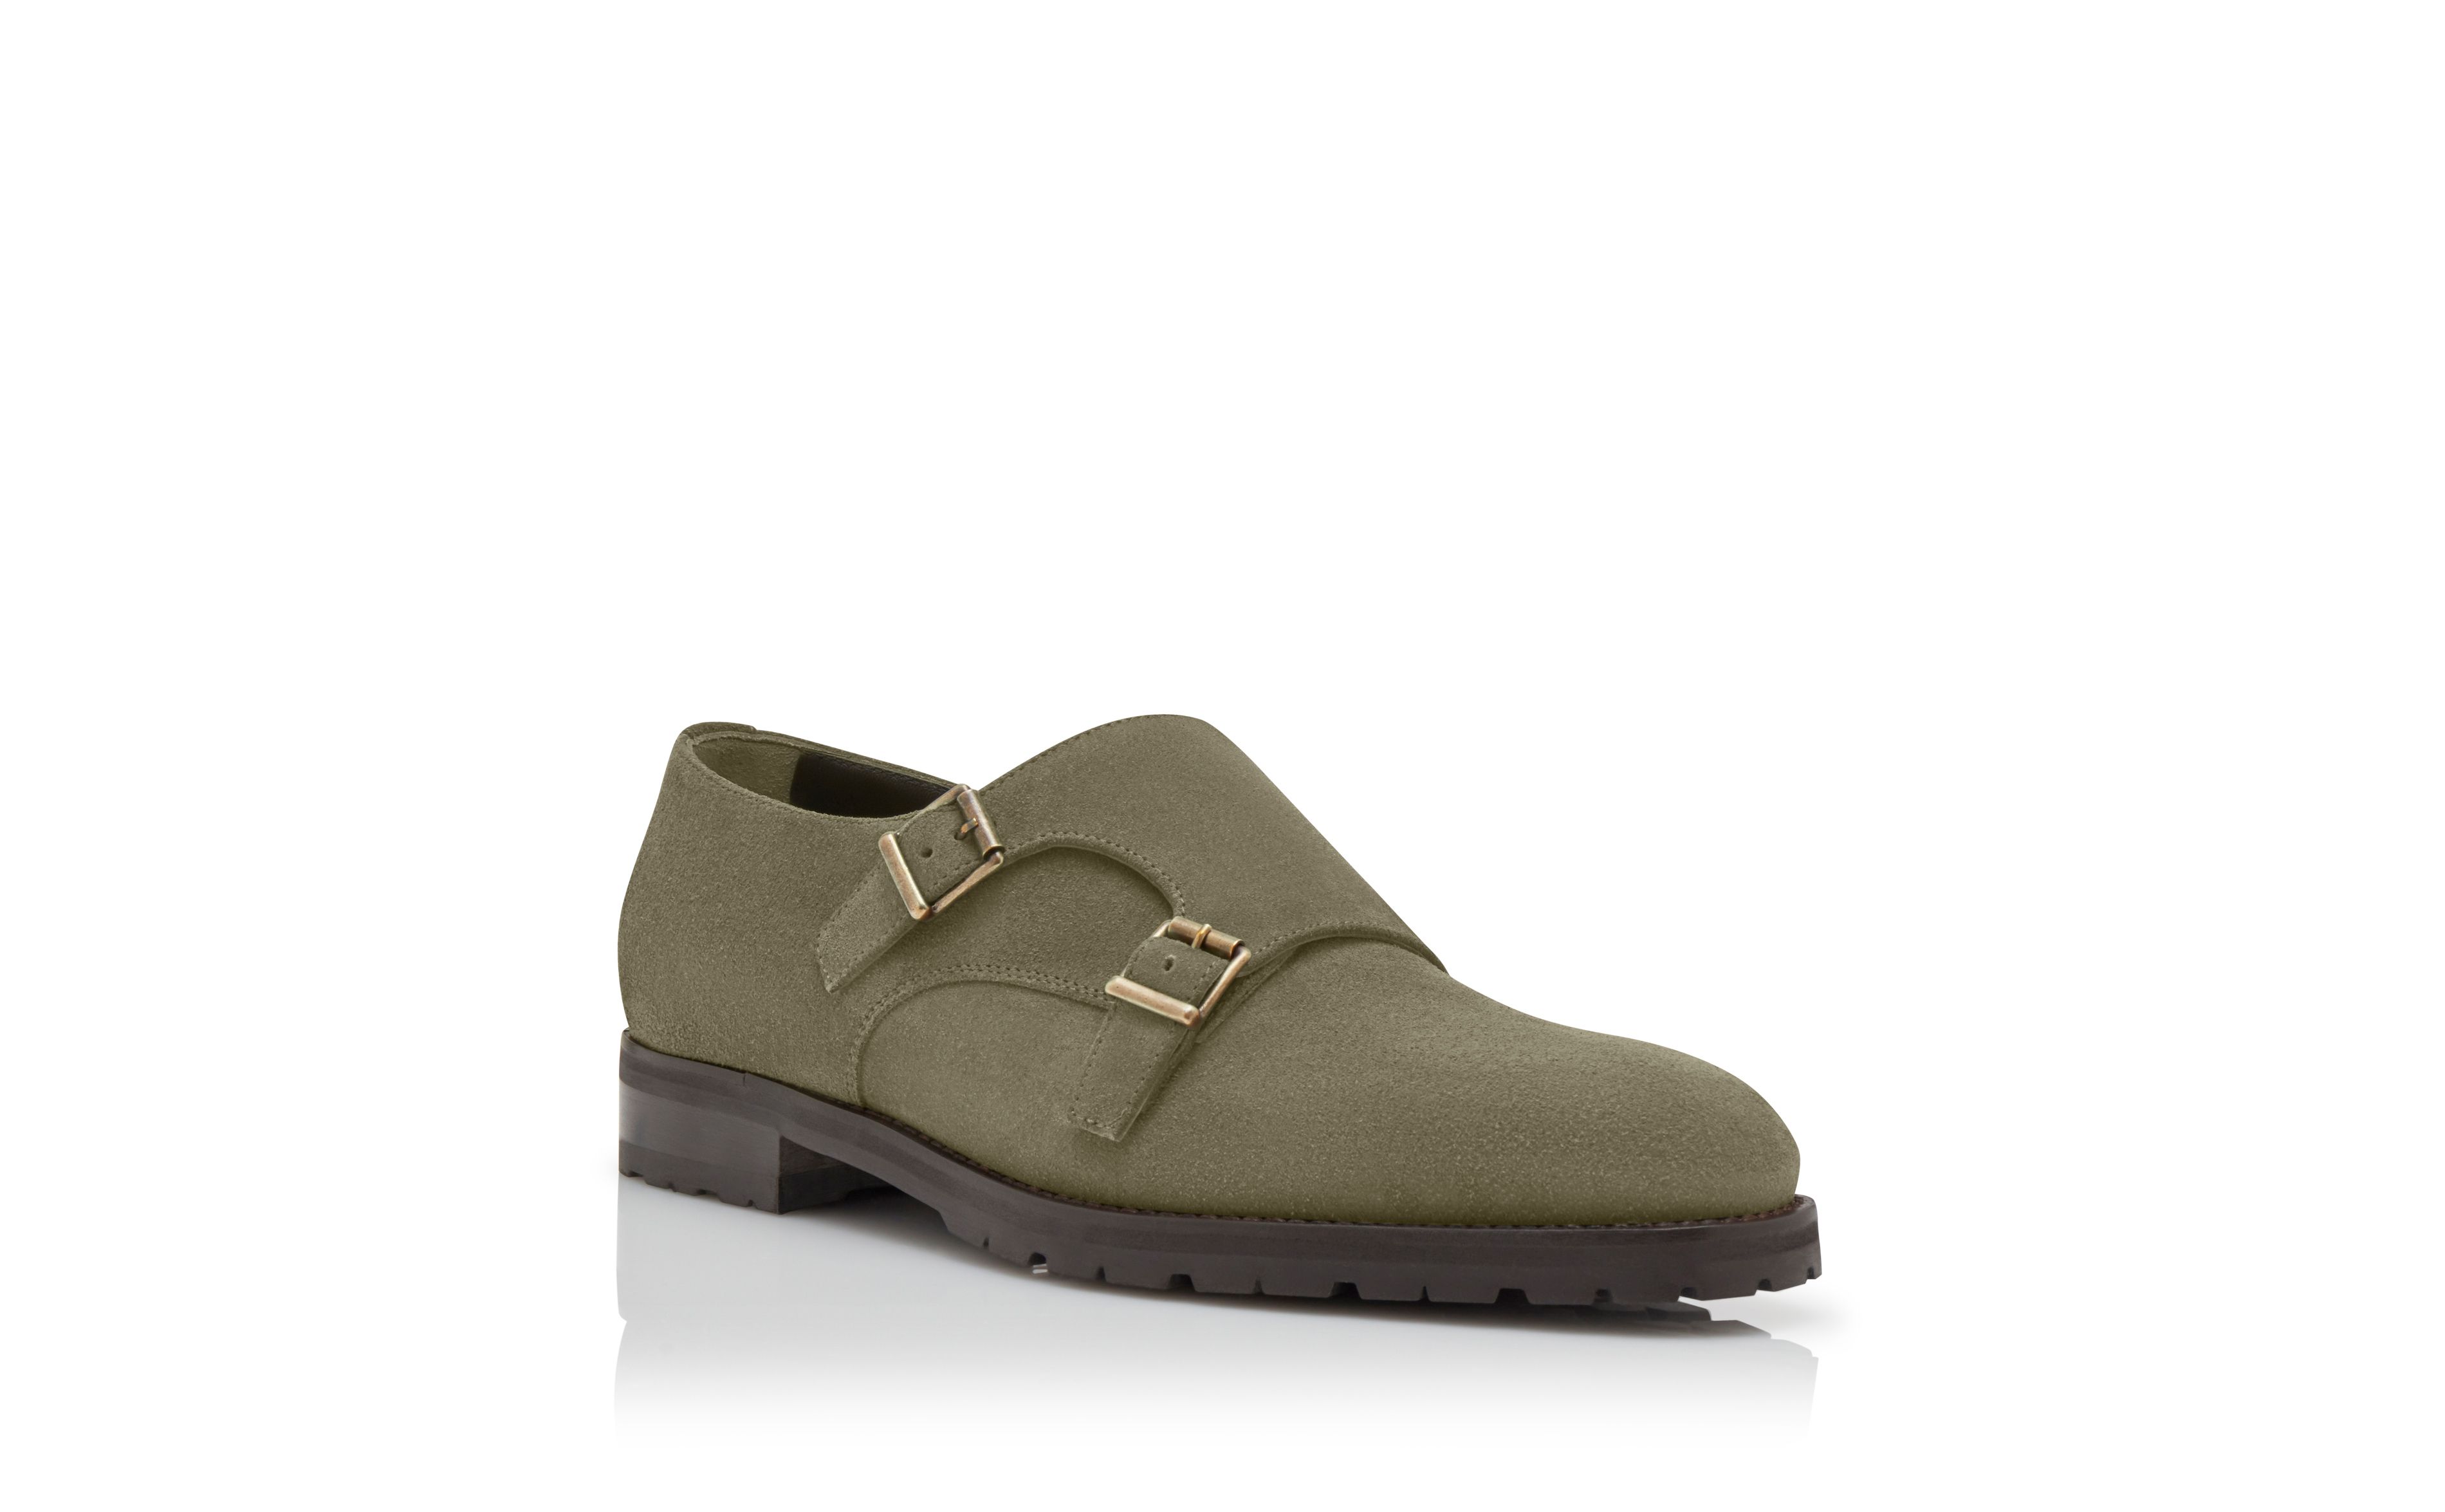 Designer Khaki Green Suede Monk Strap Shoes - Image Upsell